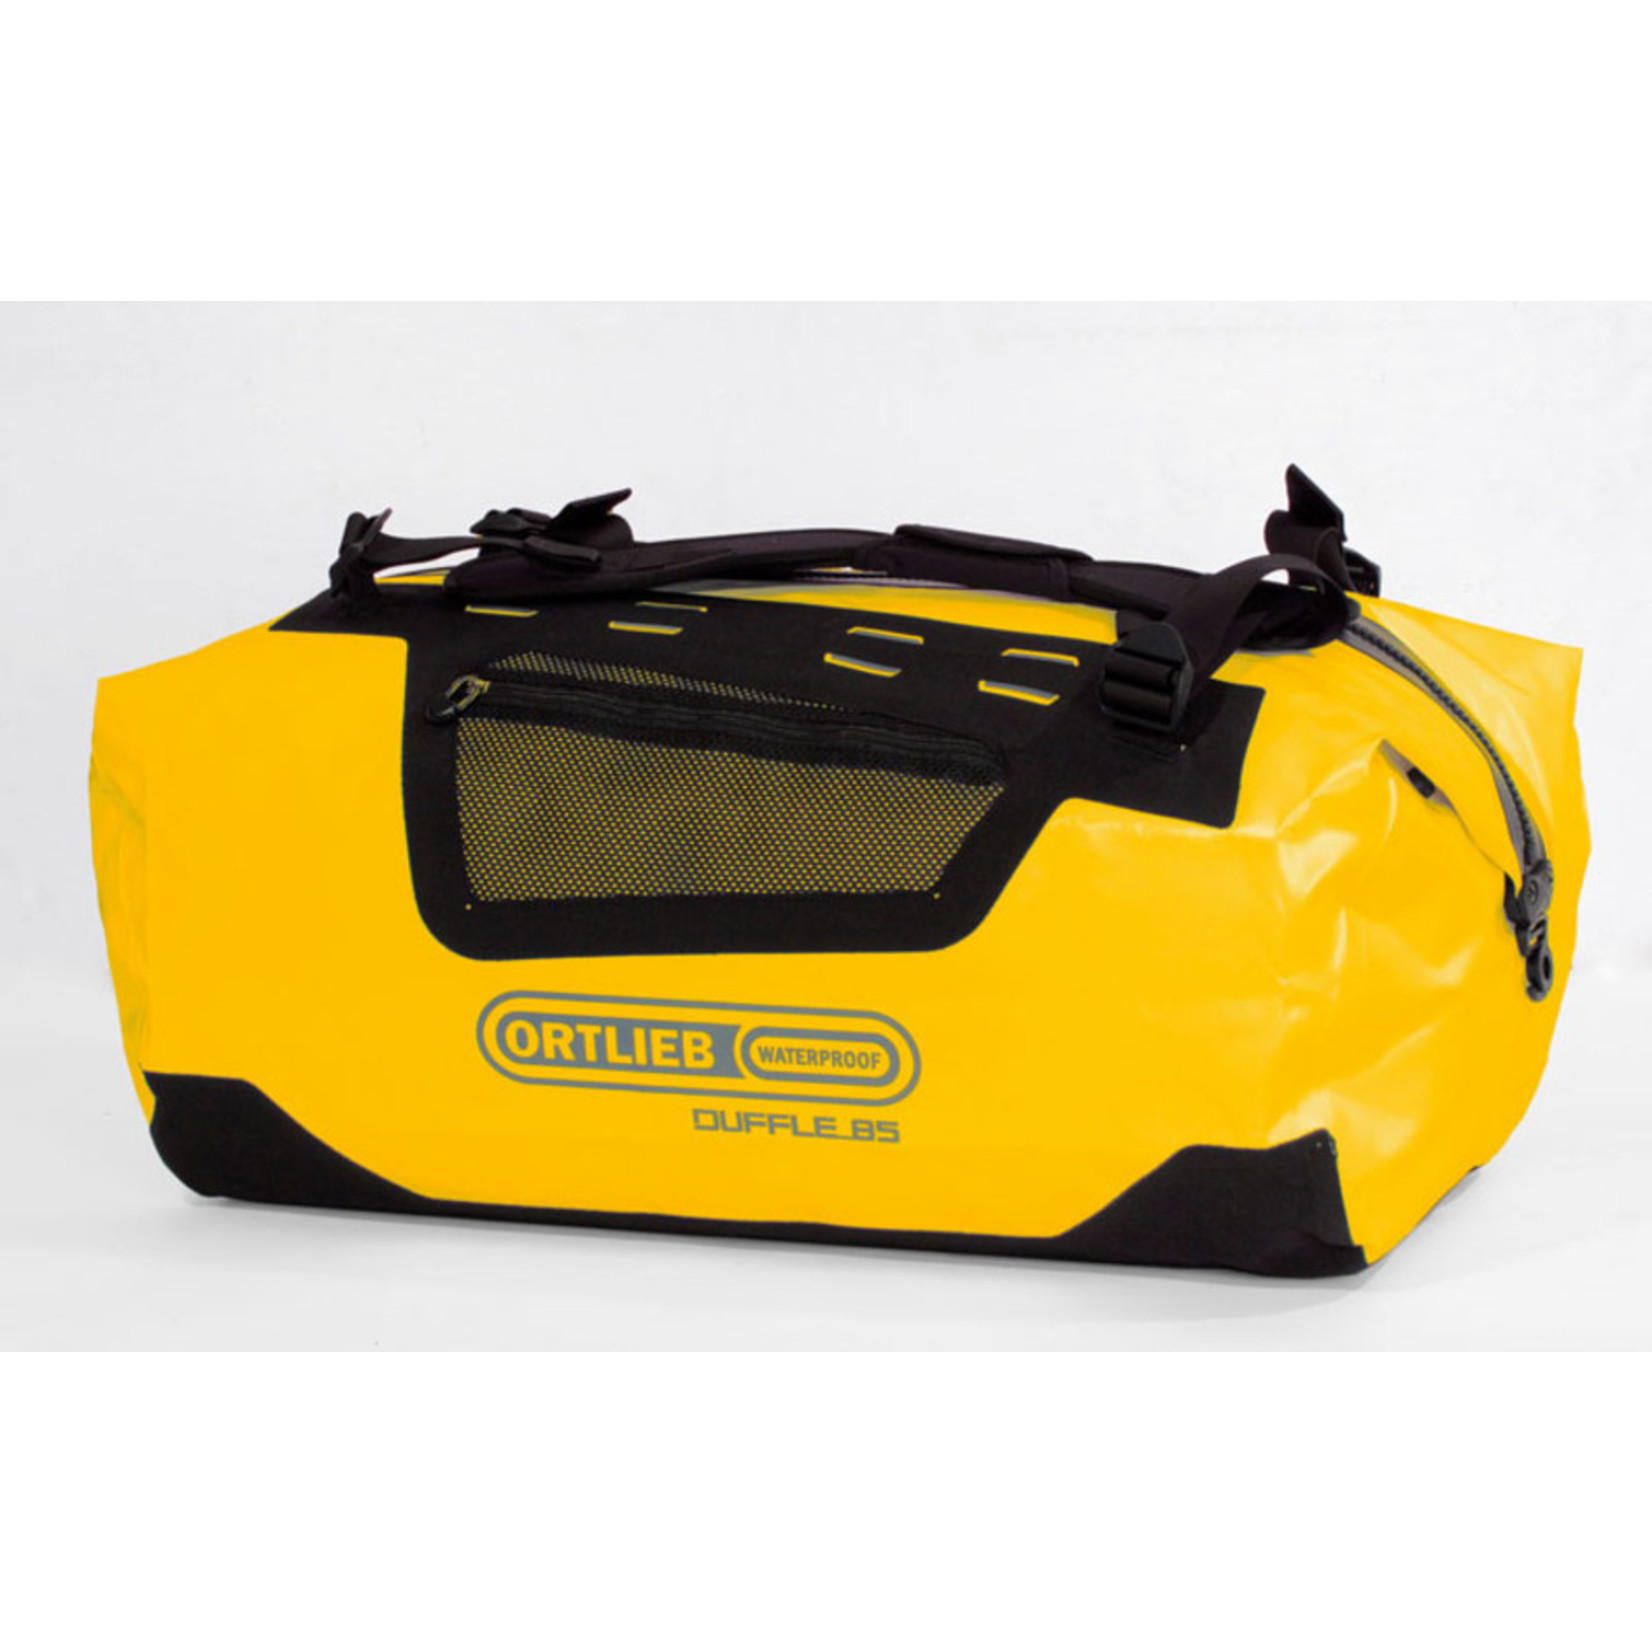 Ortlieb New Ortlieb Duffle Bag- 85L Sun Yellow-Black Waterproof Tough Ps620C Base Fabric